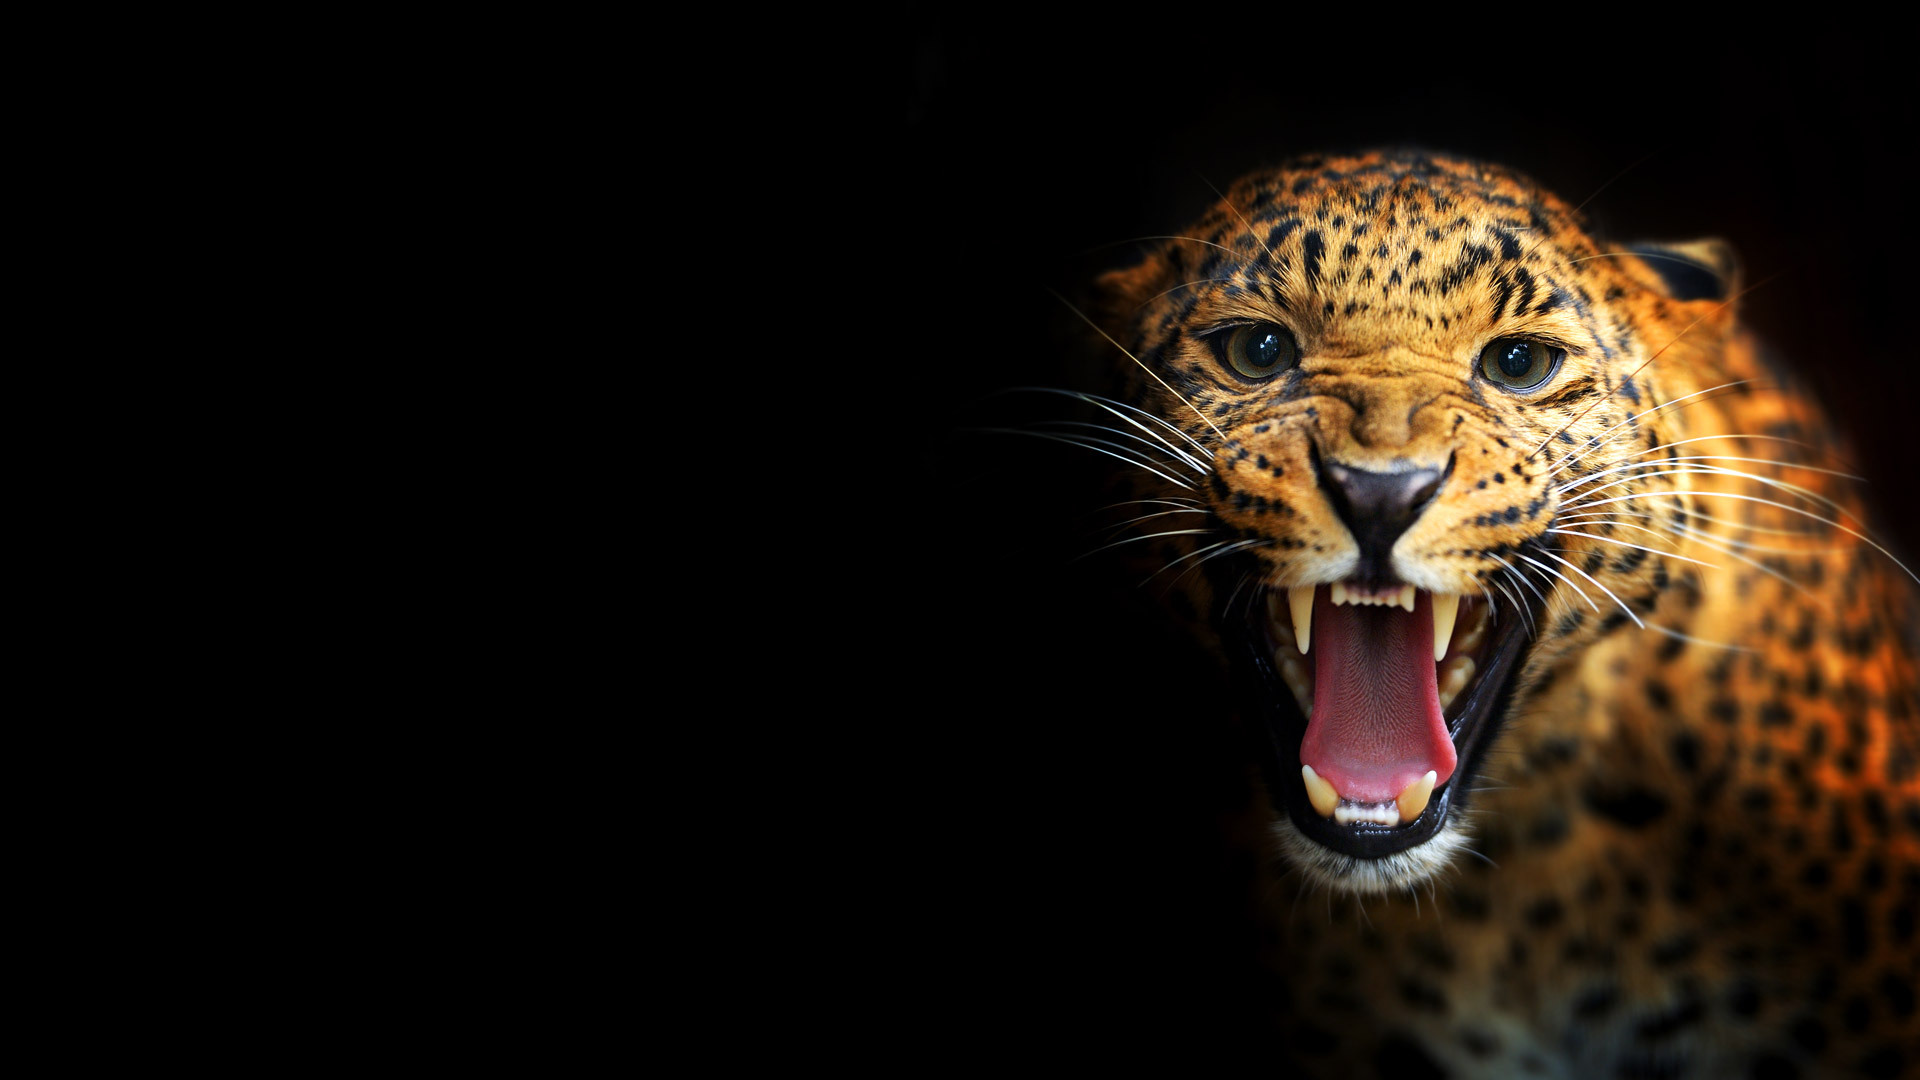 40 Gambar Hd Wallpaper of Black Leopard terbaru 2020